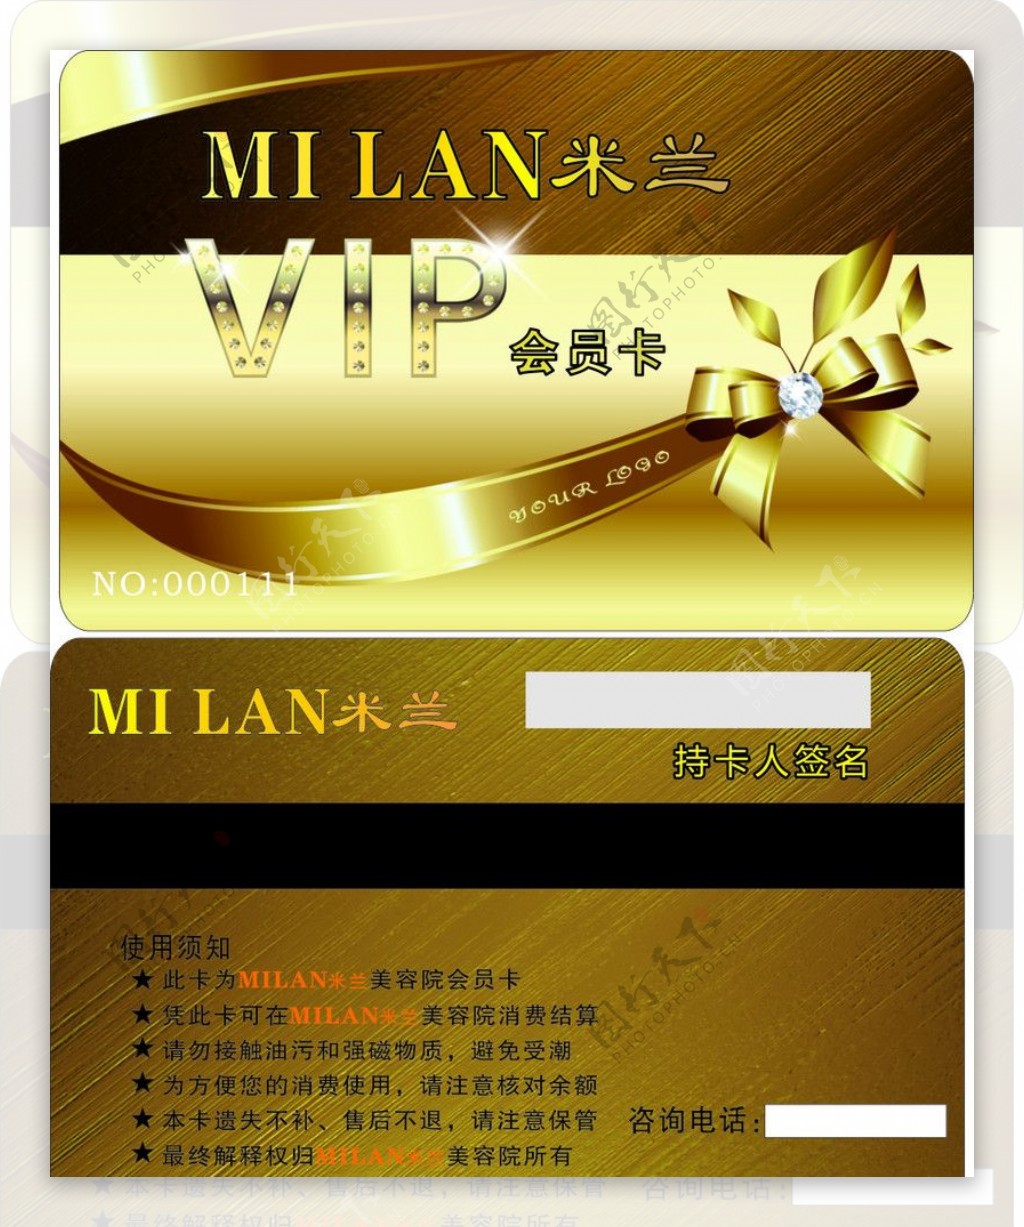 PVC卡VIP卡图片